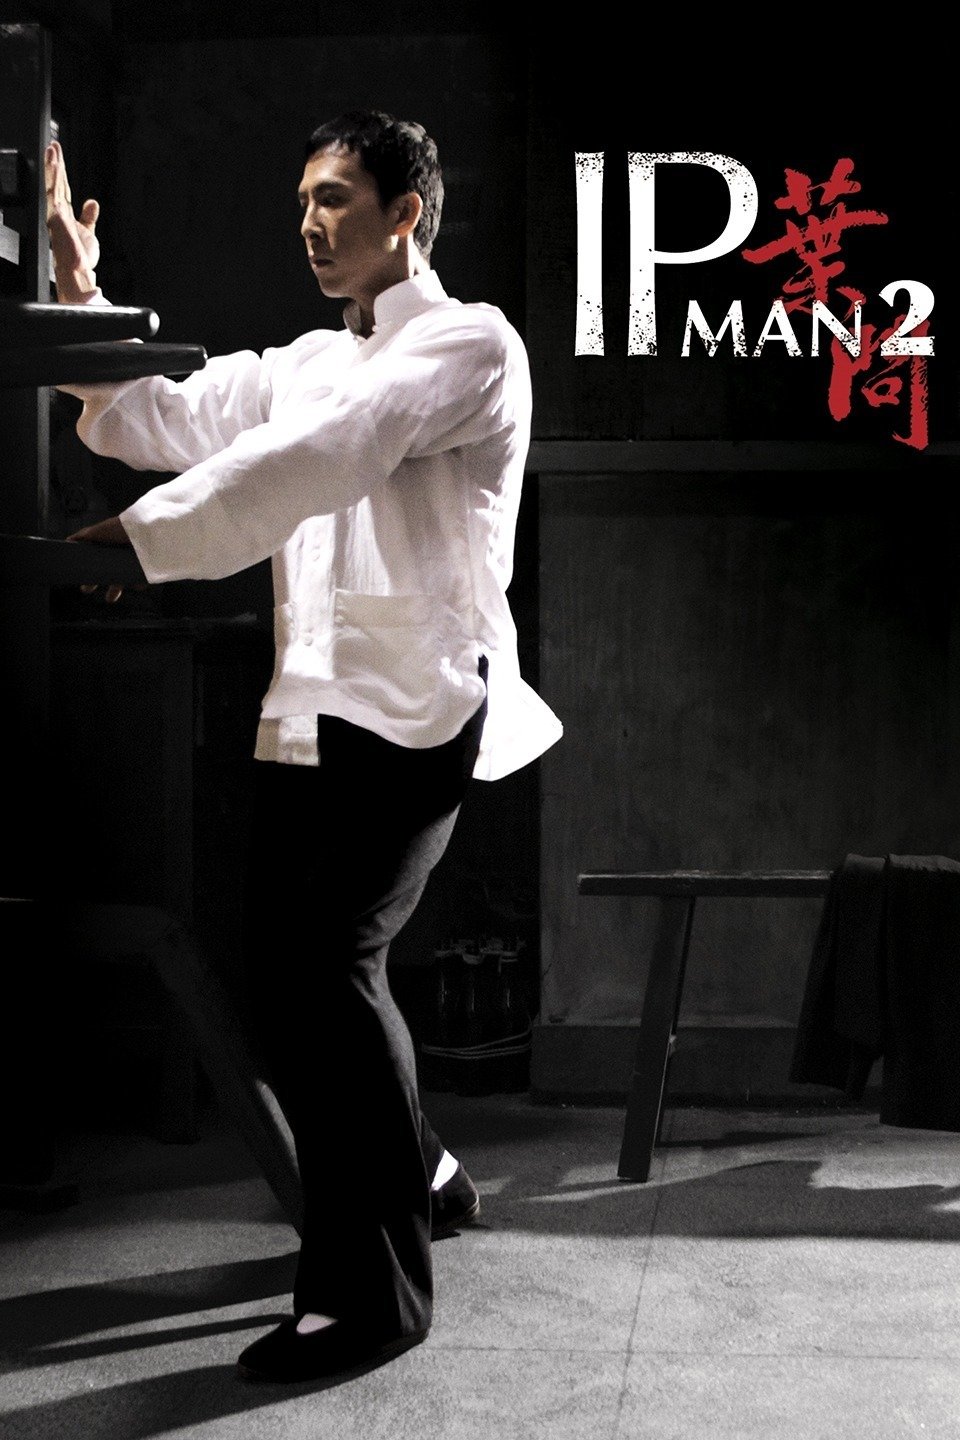 [MINI-HD] Ip Man 2: Legend of the Grandmaster (2010) ยิปมัน เจ้ากังฟูสู้ยิปตา ภาค 2 [1080p] [พากย์ไทย 5.1] [บรรยายไทย] [เสียงไทย + ซับไทย] [ONE2UP]